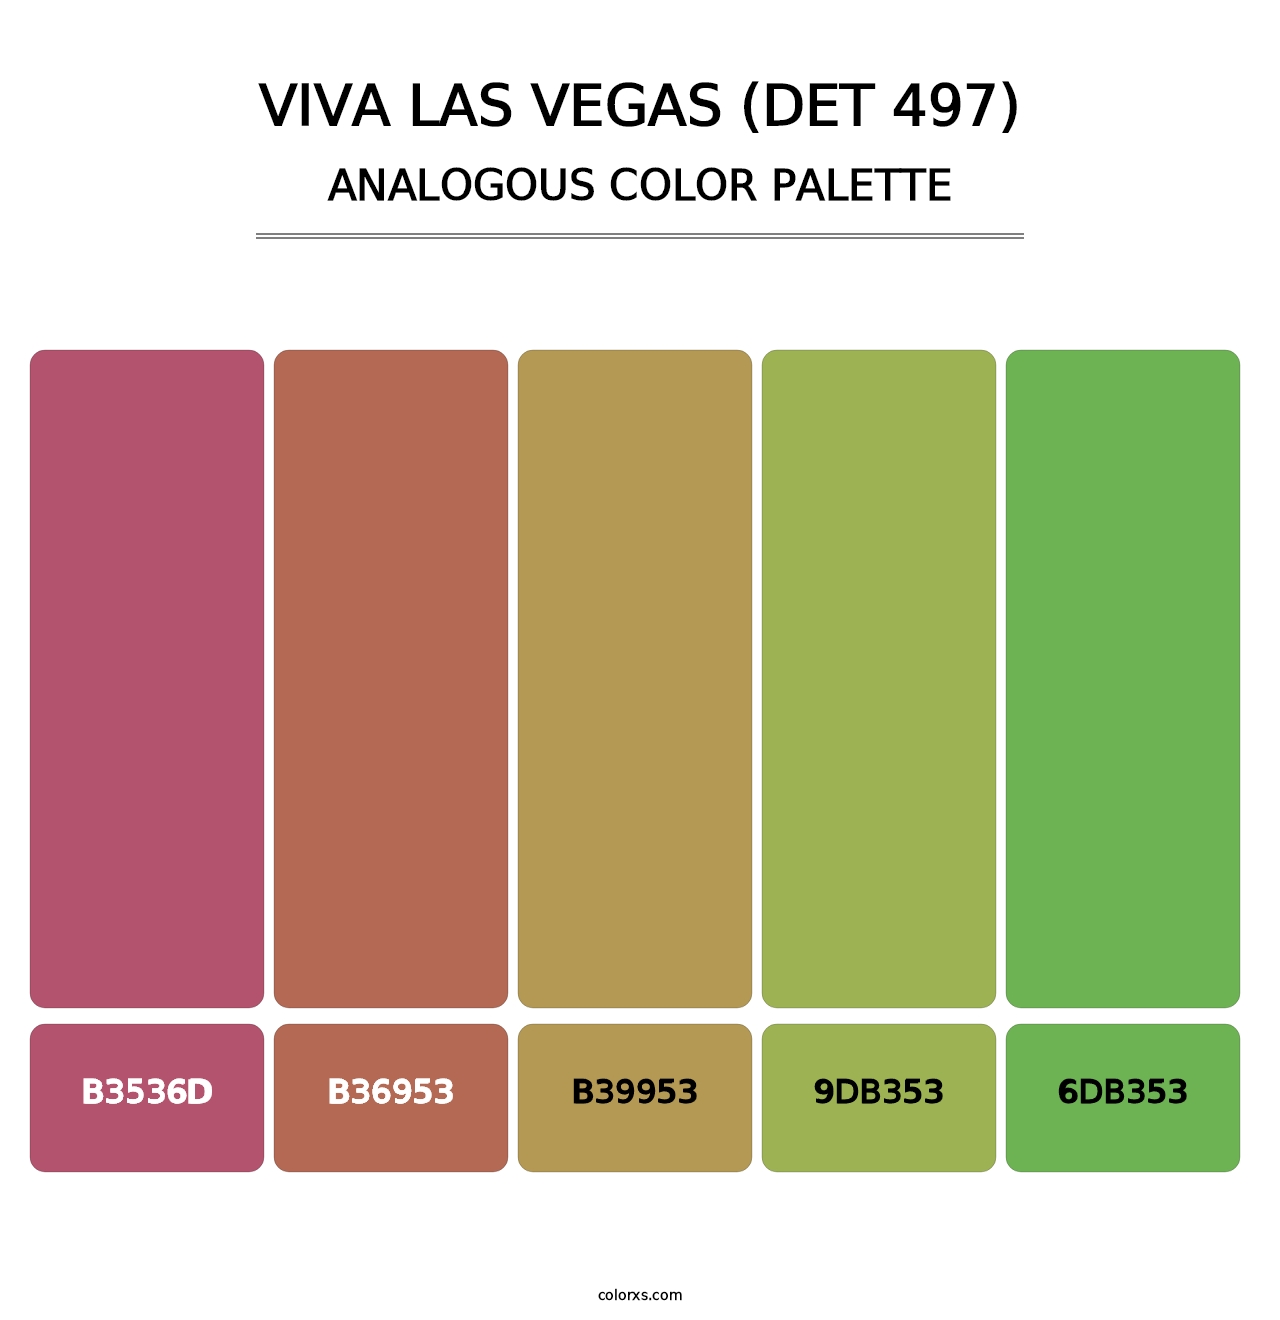 Viva Las Vegas (DET 497) - Analogous Color Palette